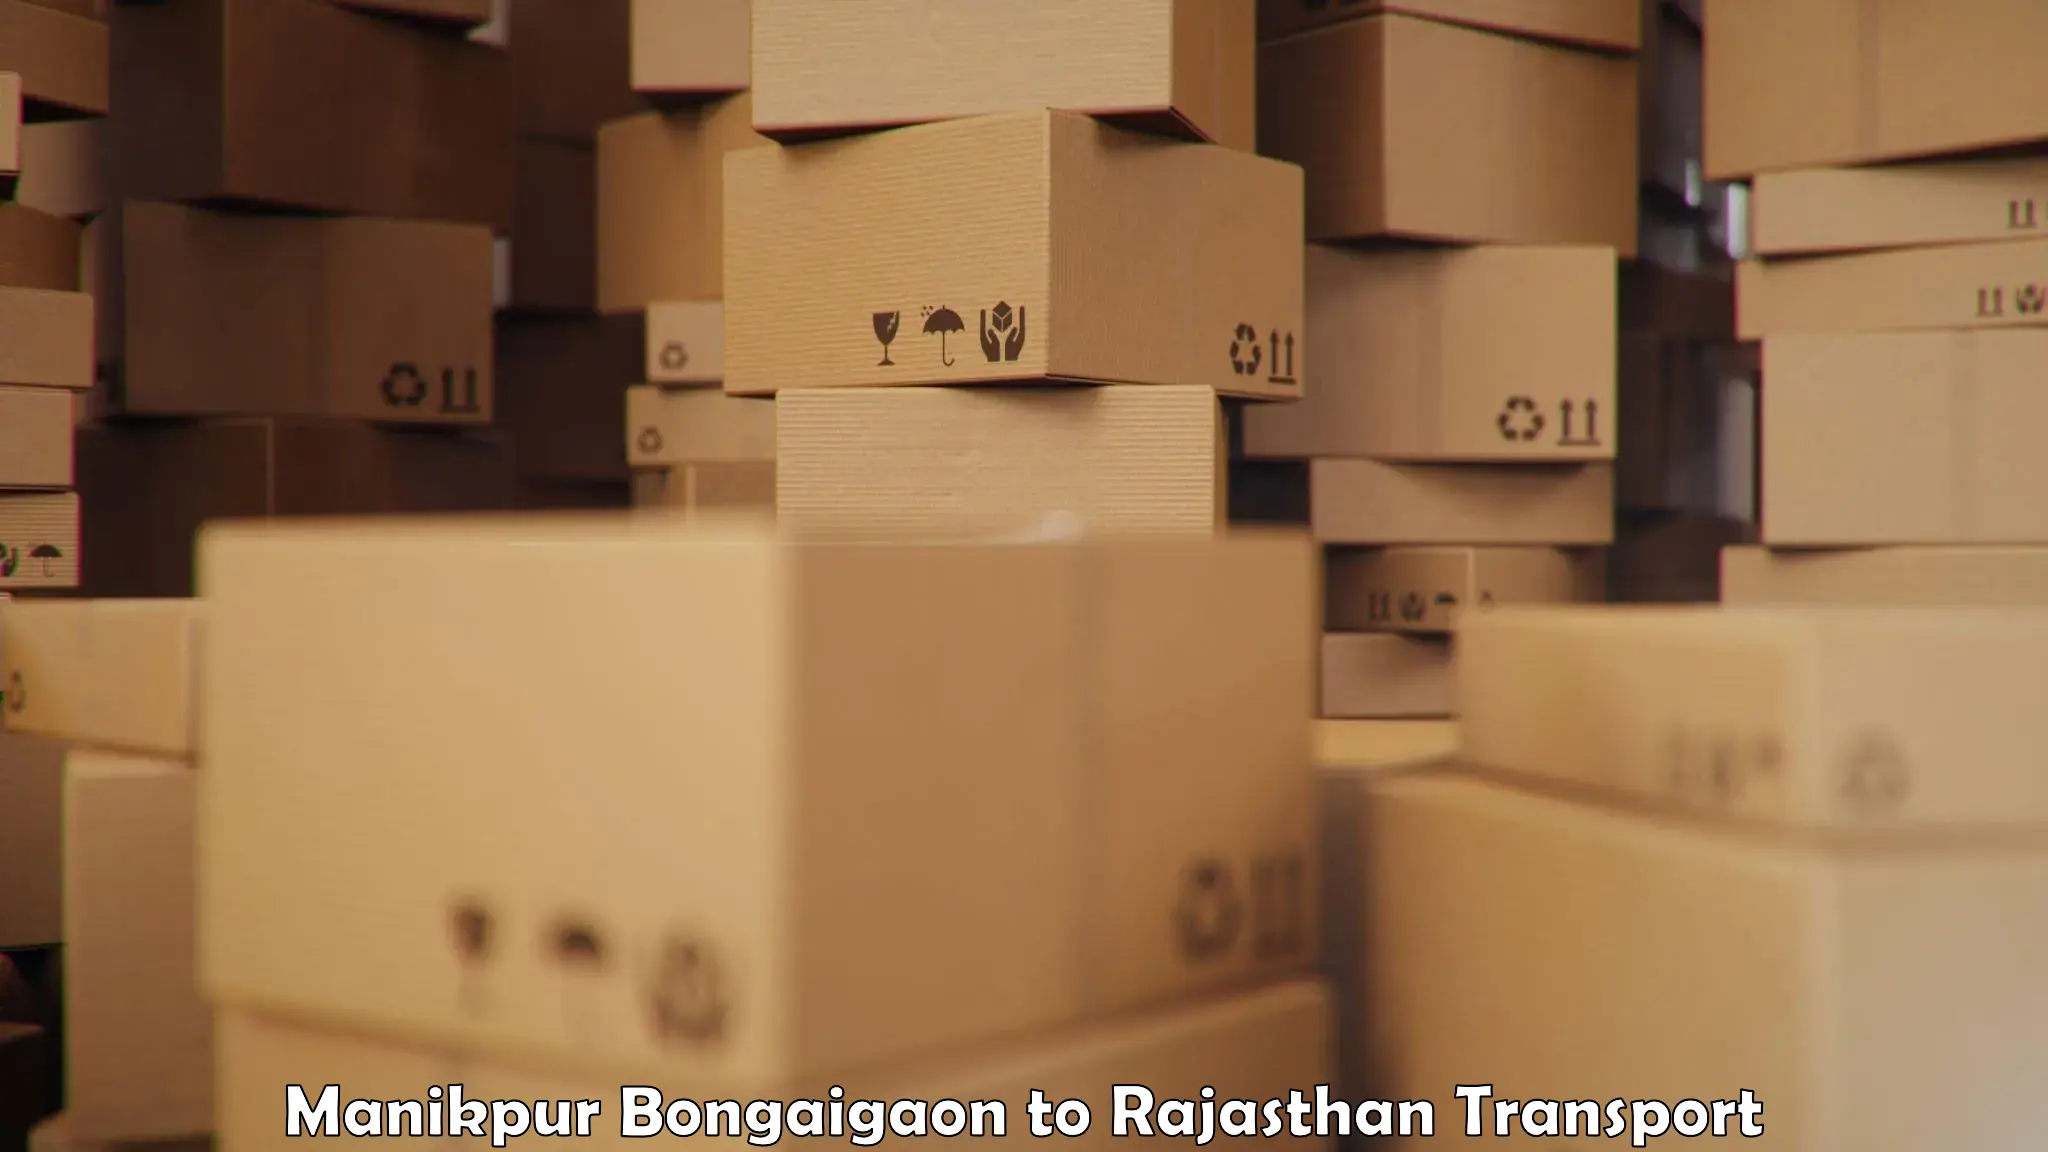 Shipping partner Manikpur Bongaigaon to Kota